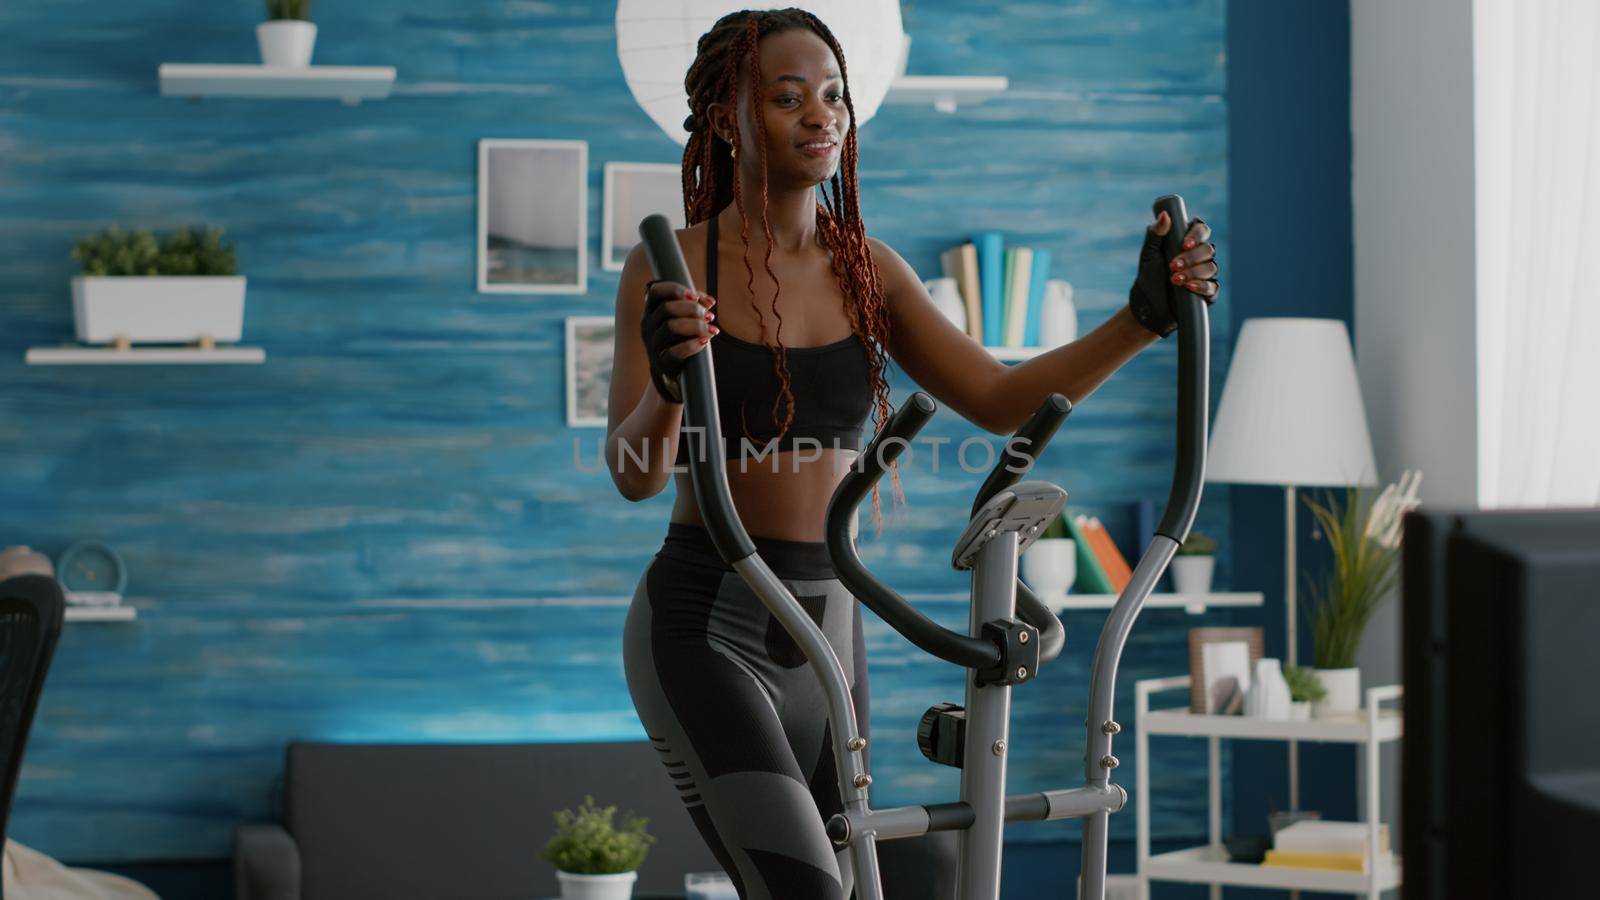 Black athletic woman doing cardio training on elliptical bike in living room during cardio morning routine in living room. Trainer in sportwear warming up bodyweight enjoying healthy lifestyle